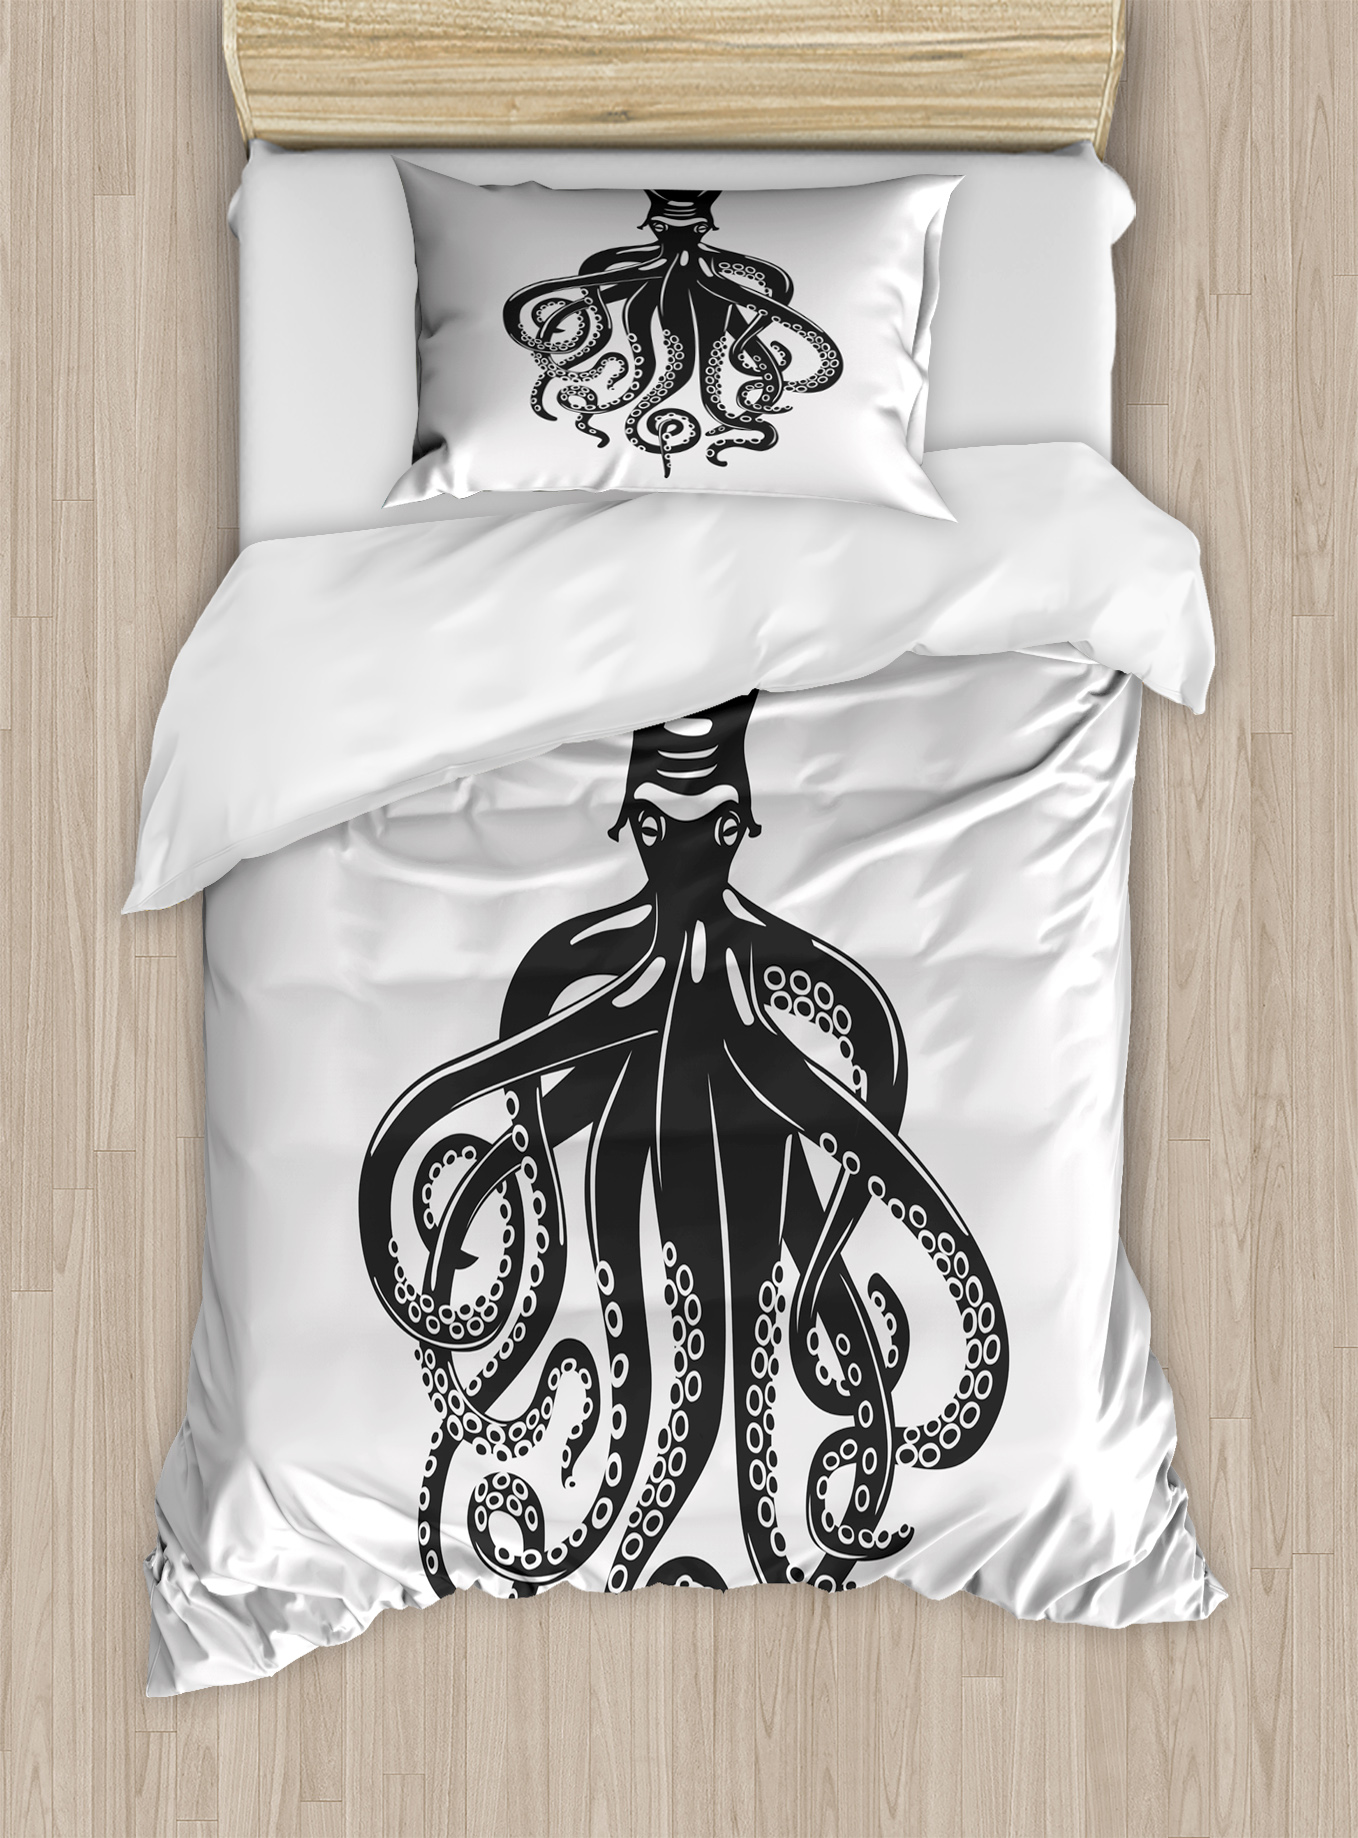 Twin / Twin XL 2 Piece Bedding Set with Pillow Sham Black White Octopus Decor Duvet Cover Set by Ambesonne Marine Wildlife Theme Octopus Illustration Sketch Style Decorative Art Nautical Decor